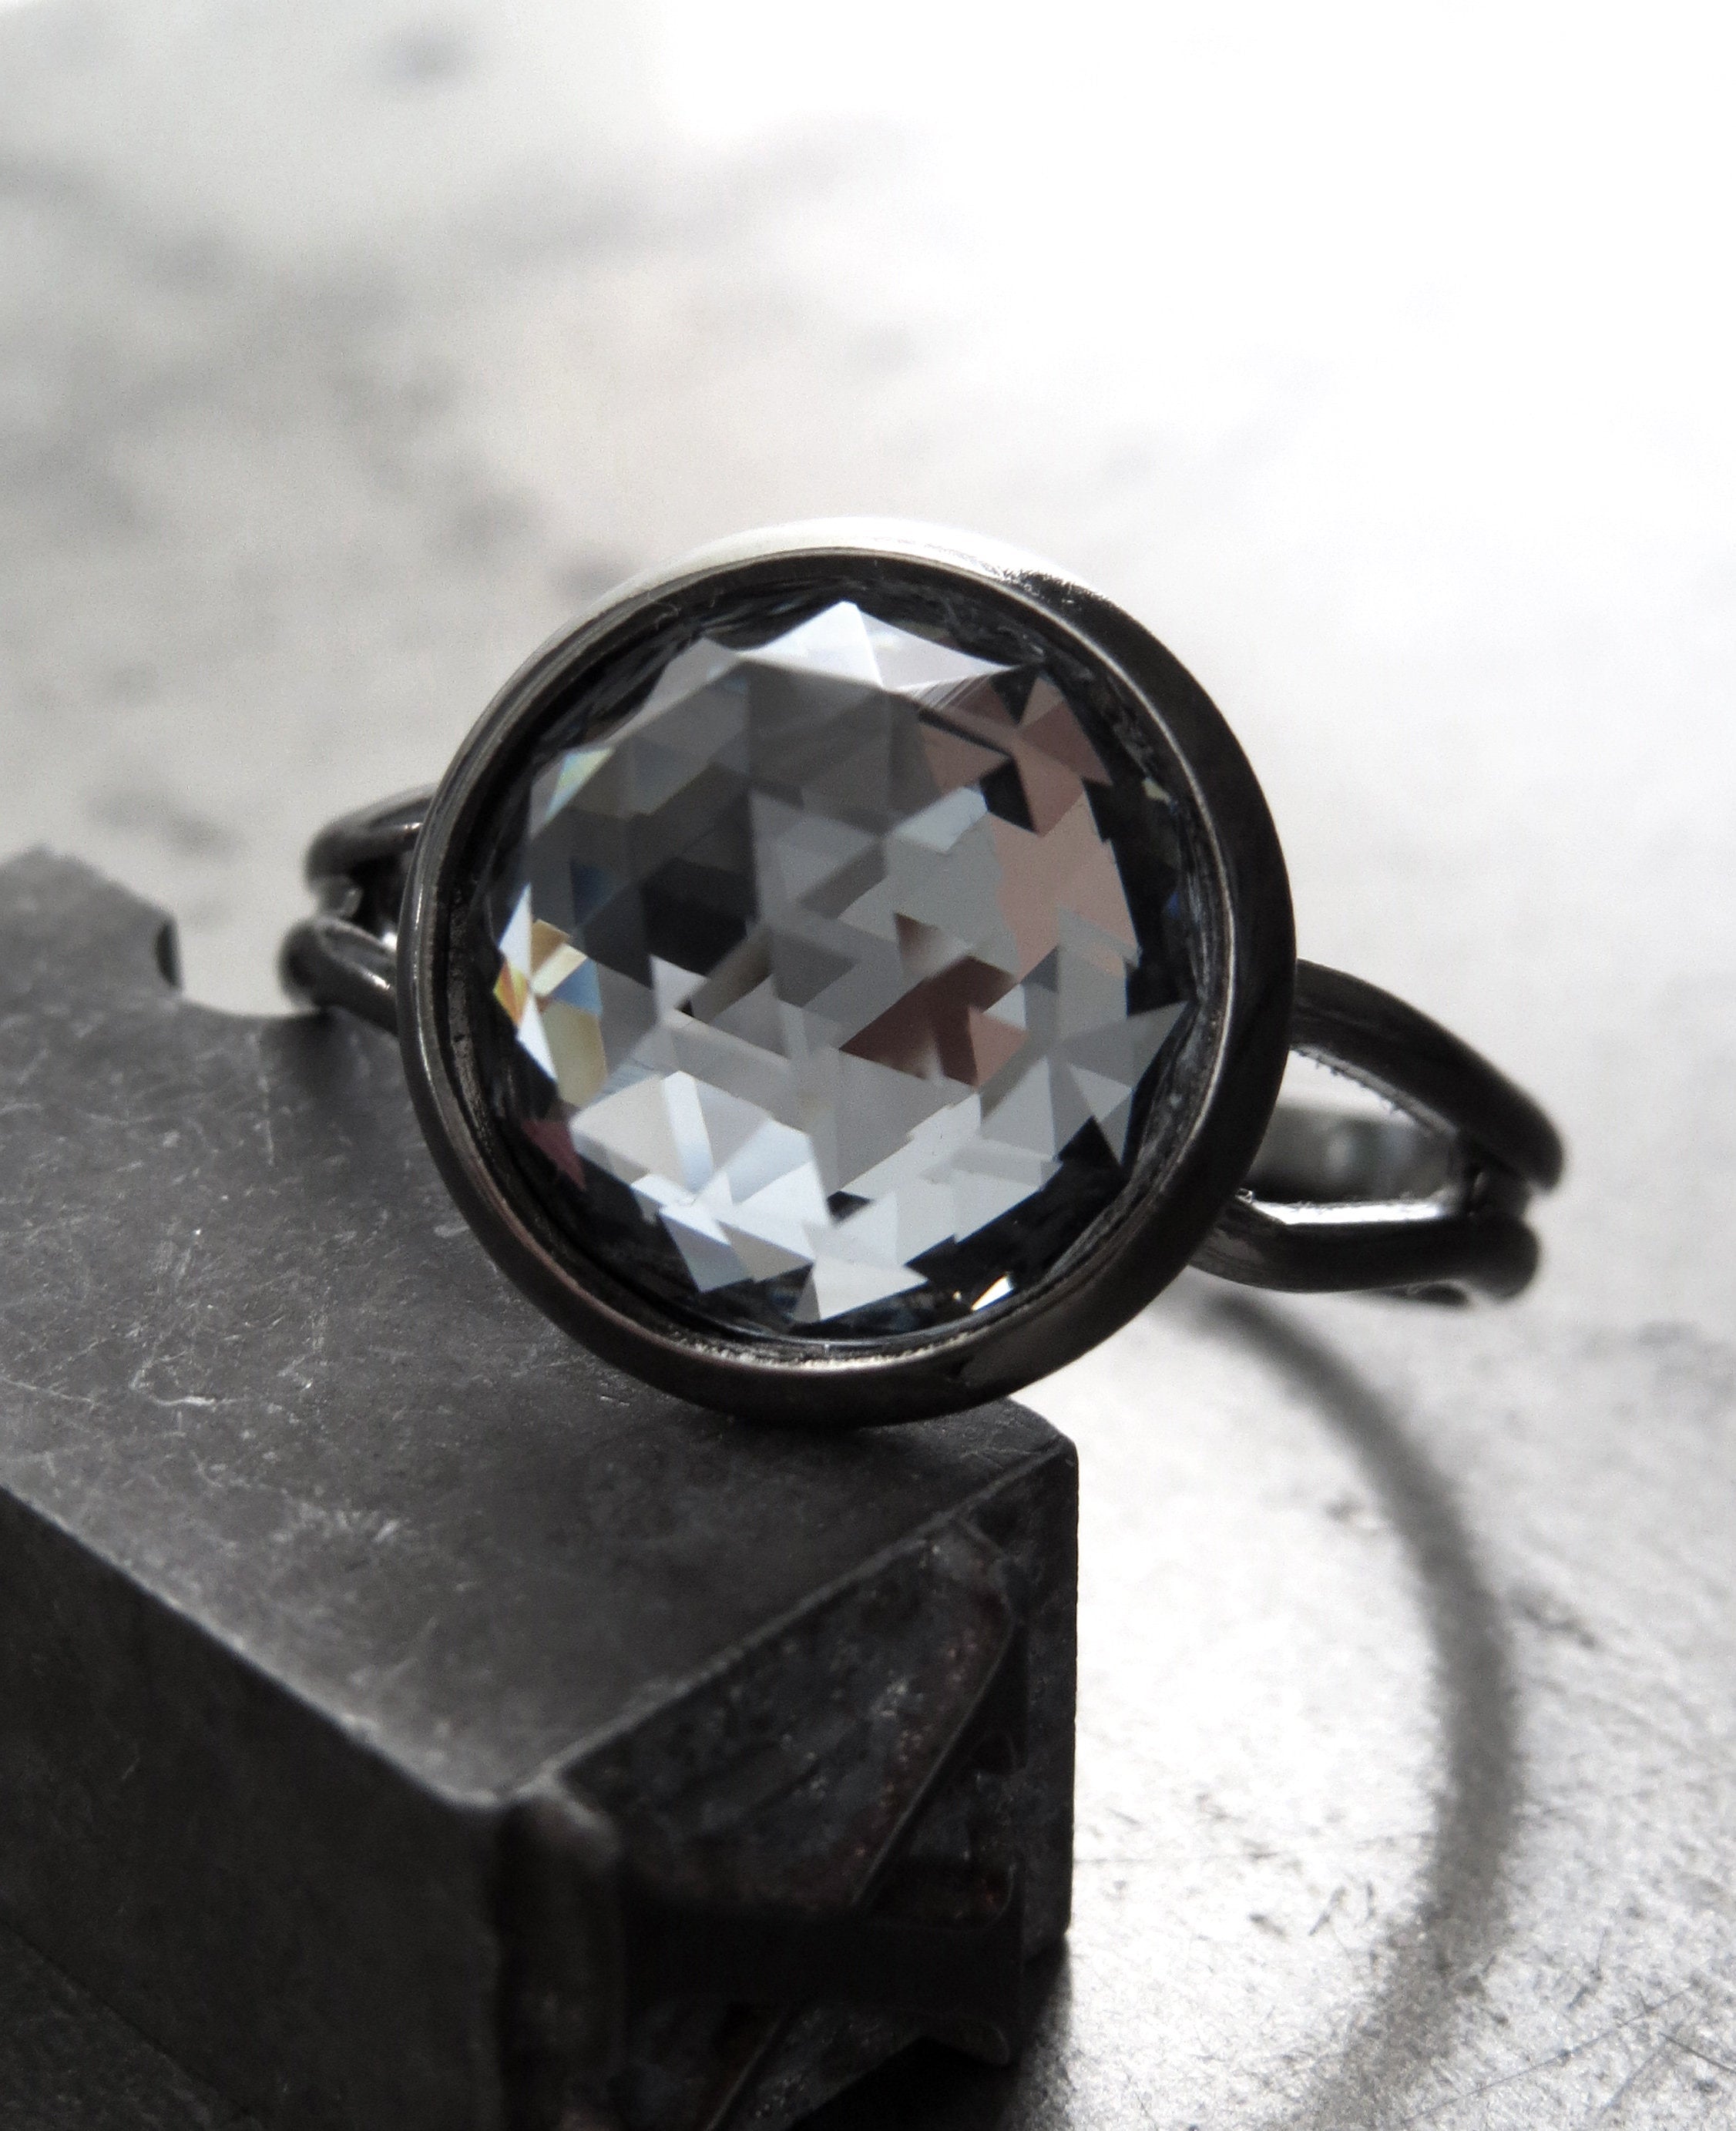 HUSH - Black Night Crystal Ring with Swarovski Crystal, Rare Round Dome Crystal with Black Gunmetal Adjustable Band, Womens Modern Jewelry